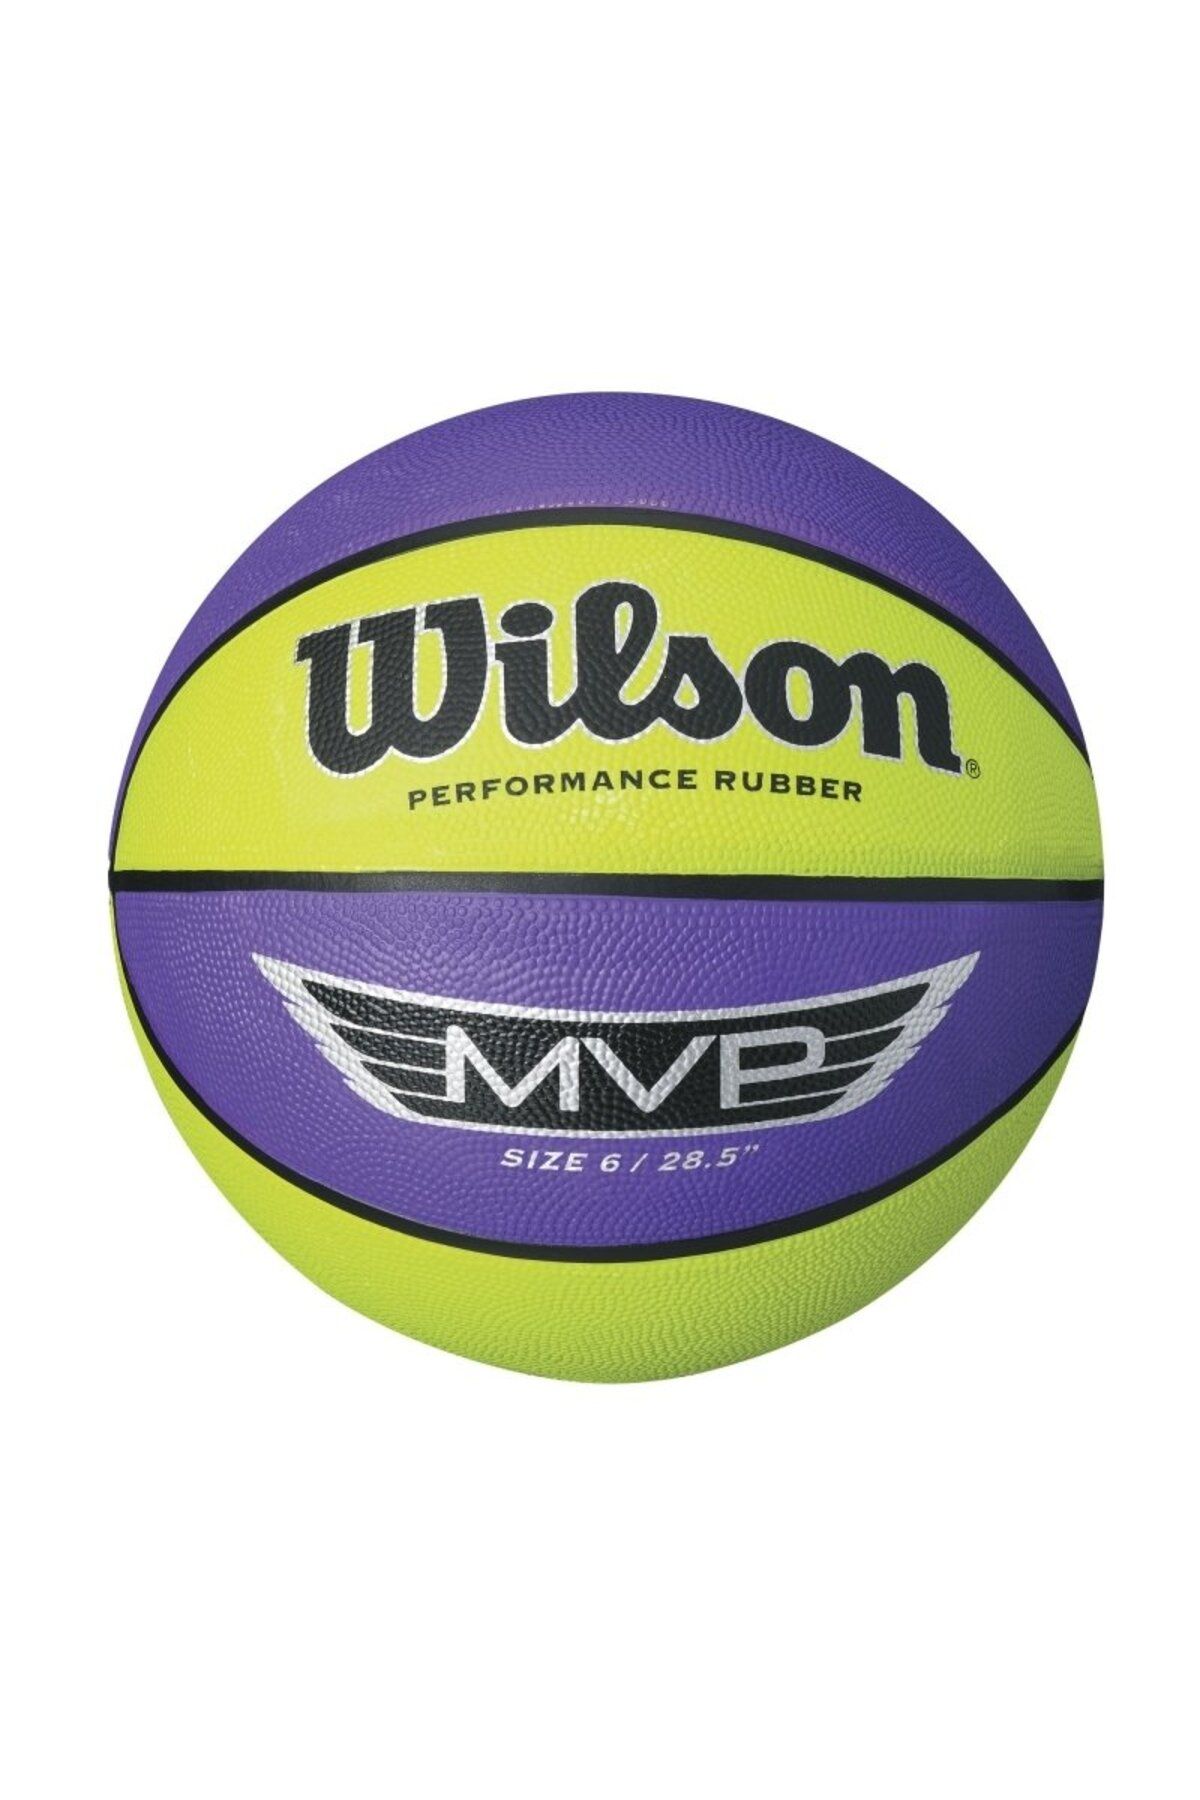 Wilson Mvp 285 Prlı Basketbol Topu Wtb9067xb06